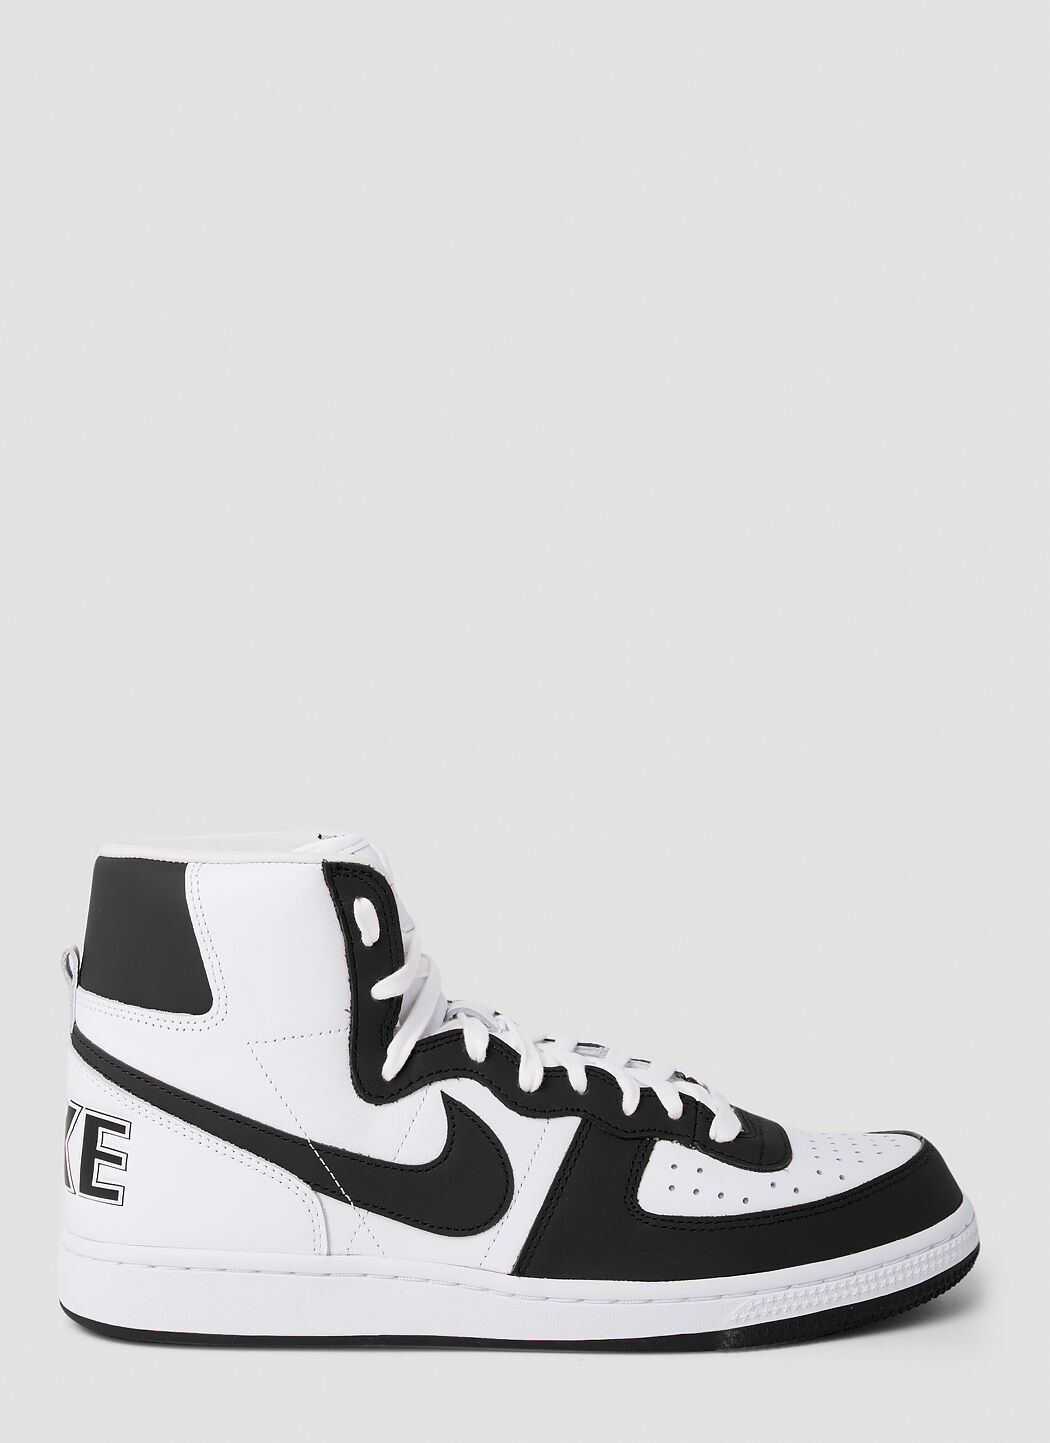 Comme des Garçons Homme Plus x Nike x Nike Terminator Sneakers White cgh0154002